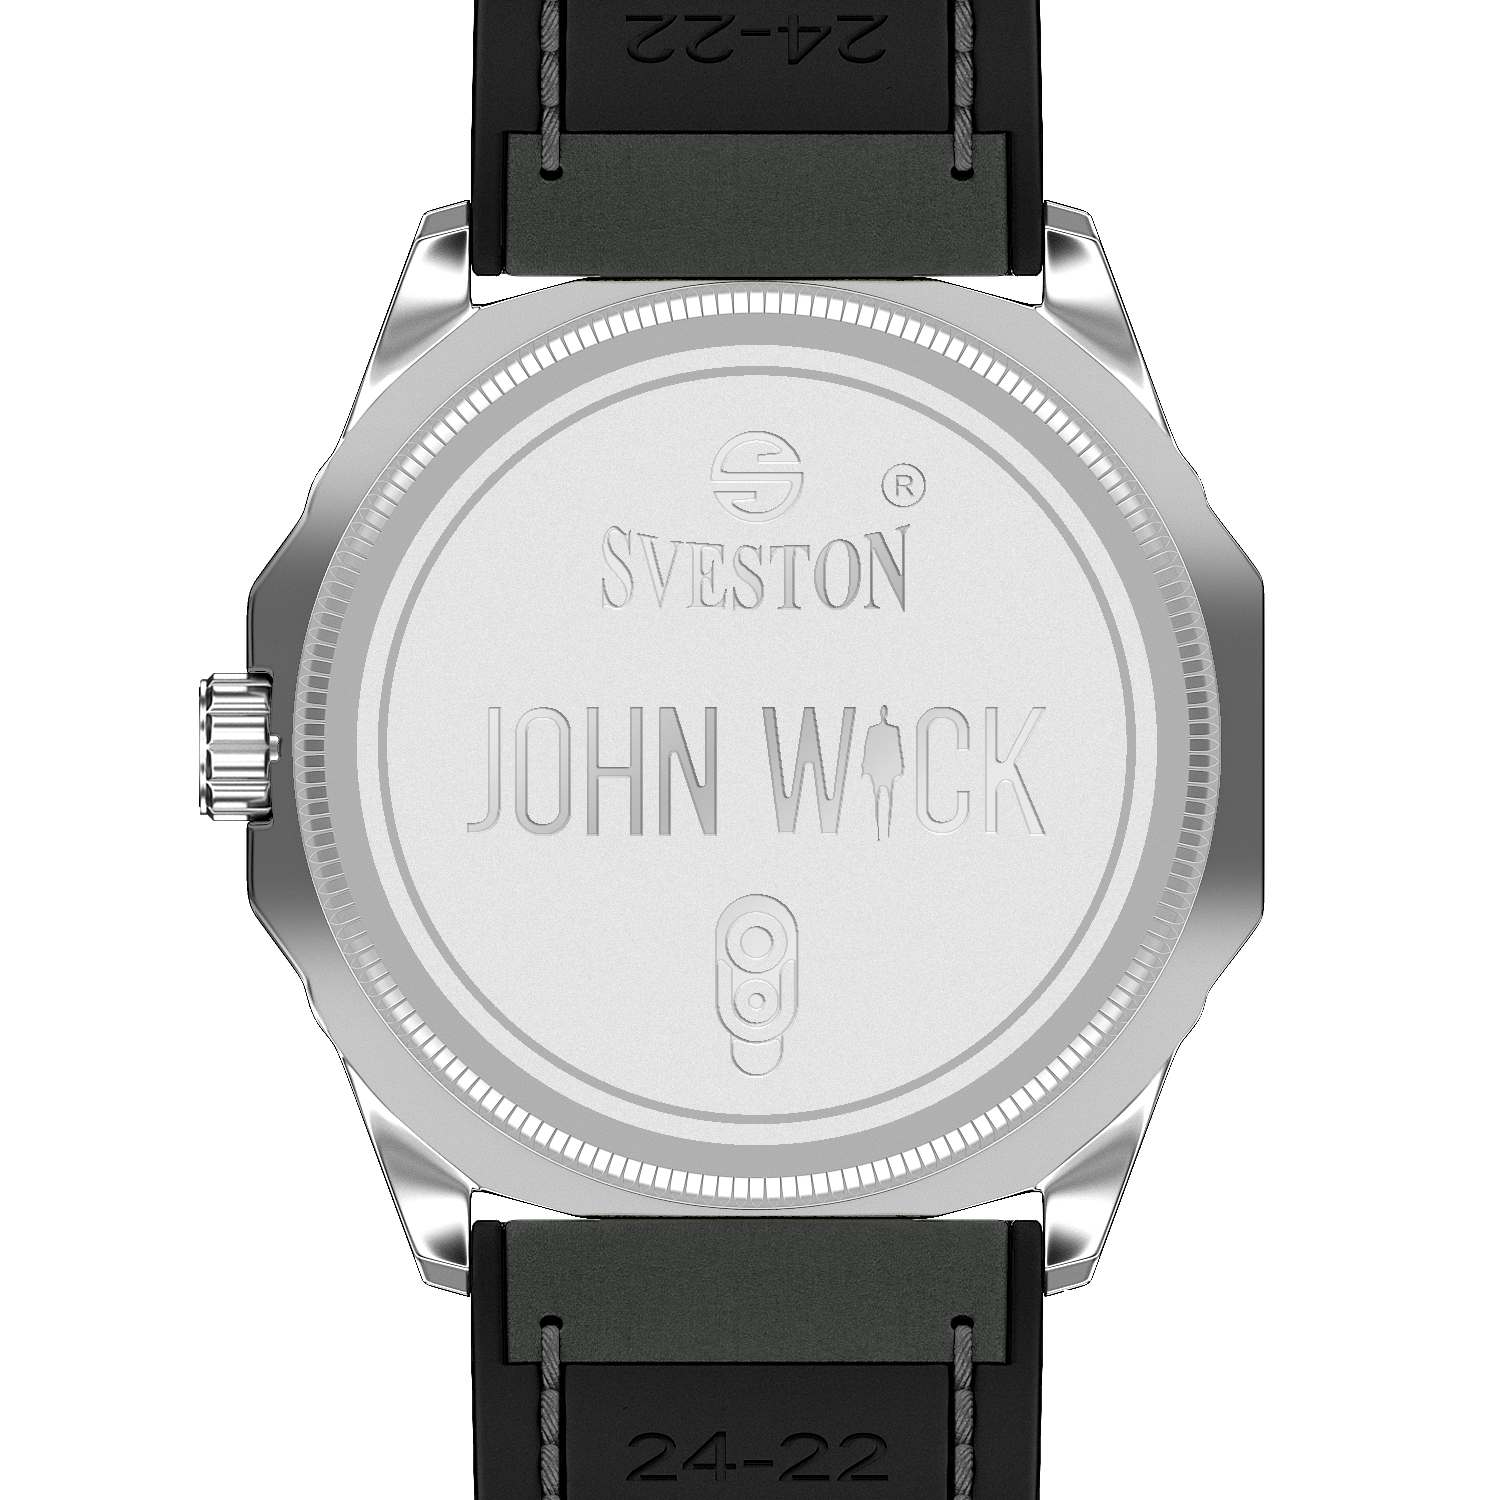 Sveston Johnwick 3.0 SV-7028-M